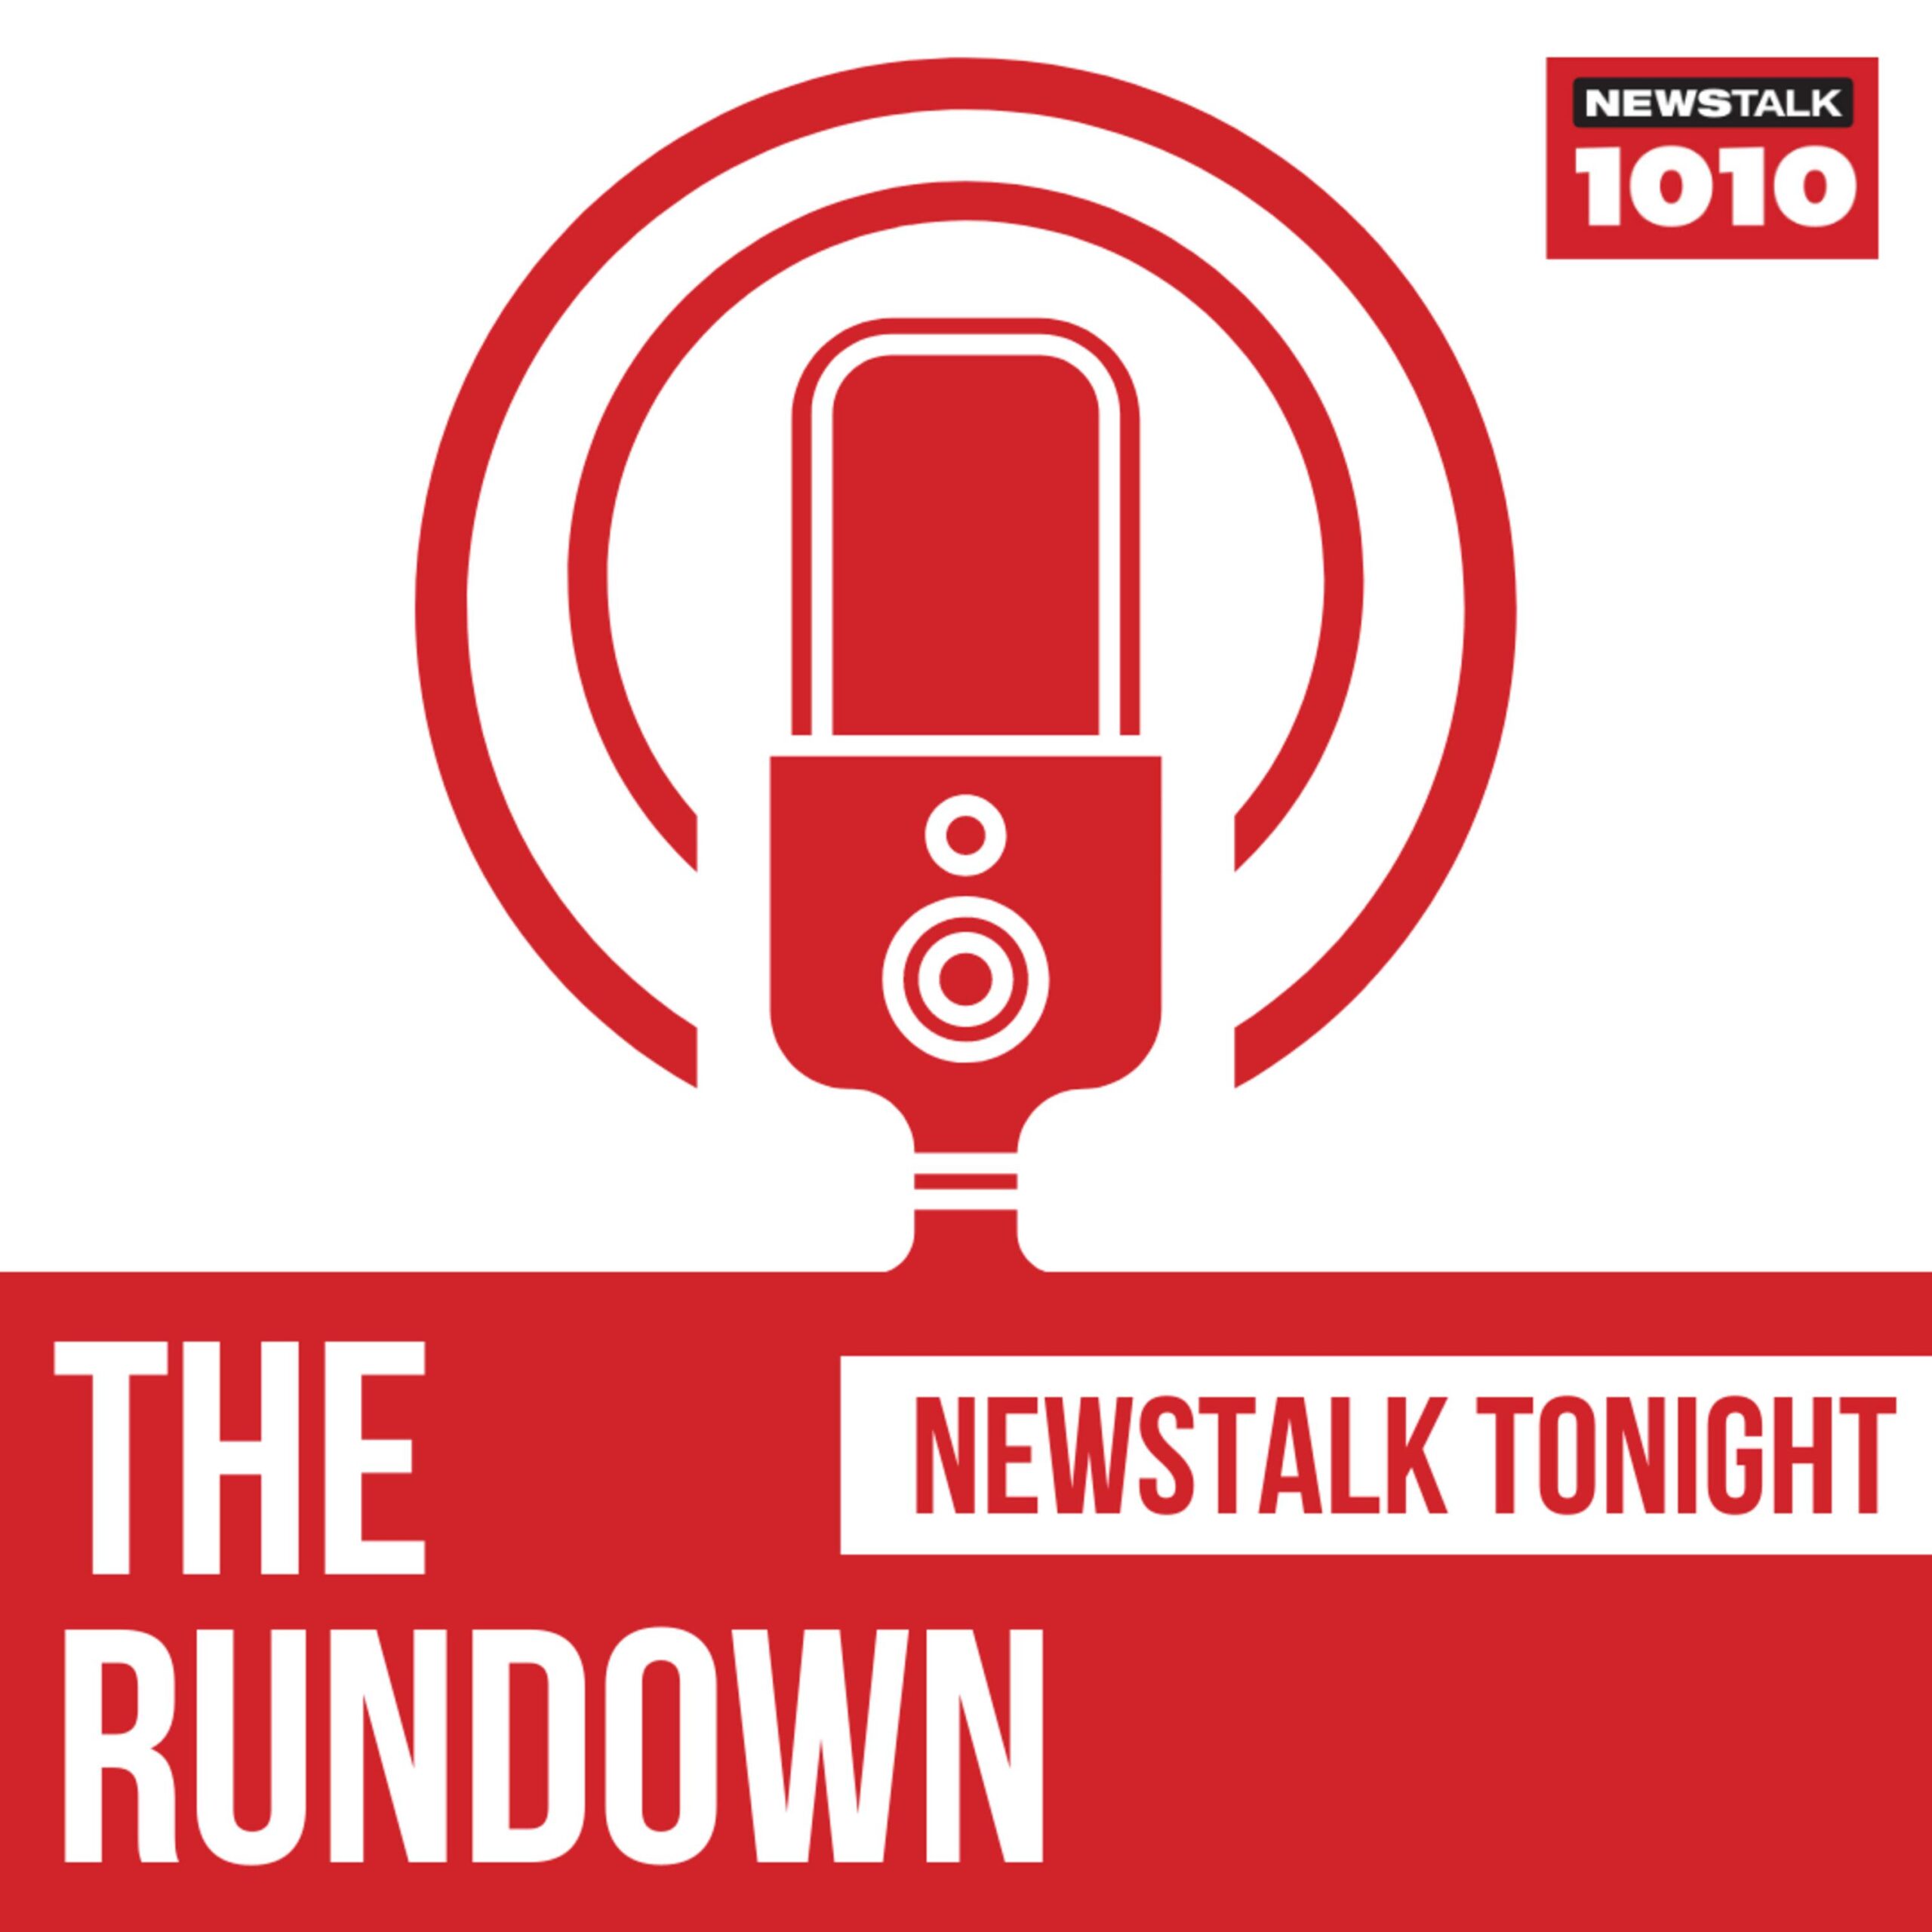 Newstalk 1010: Jim Richards’ The Rundown with Stephen Murdoch & Jon Liedtke